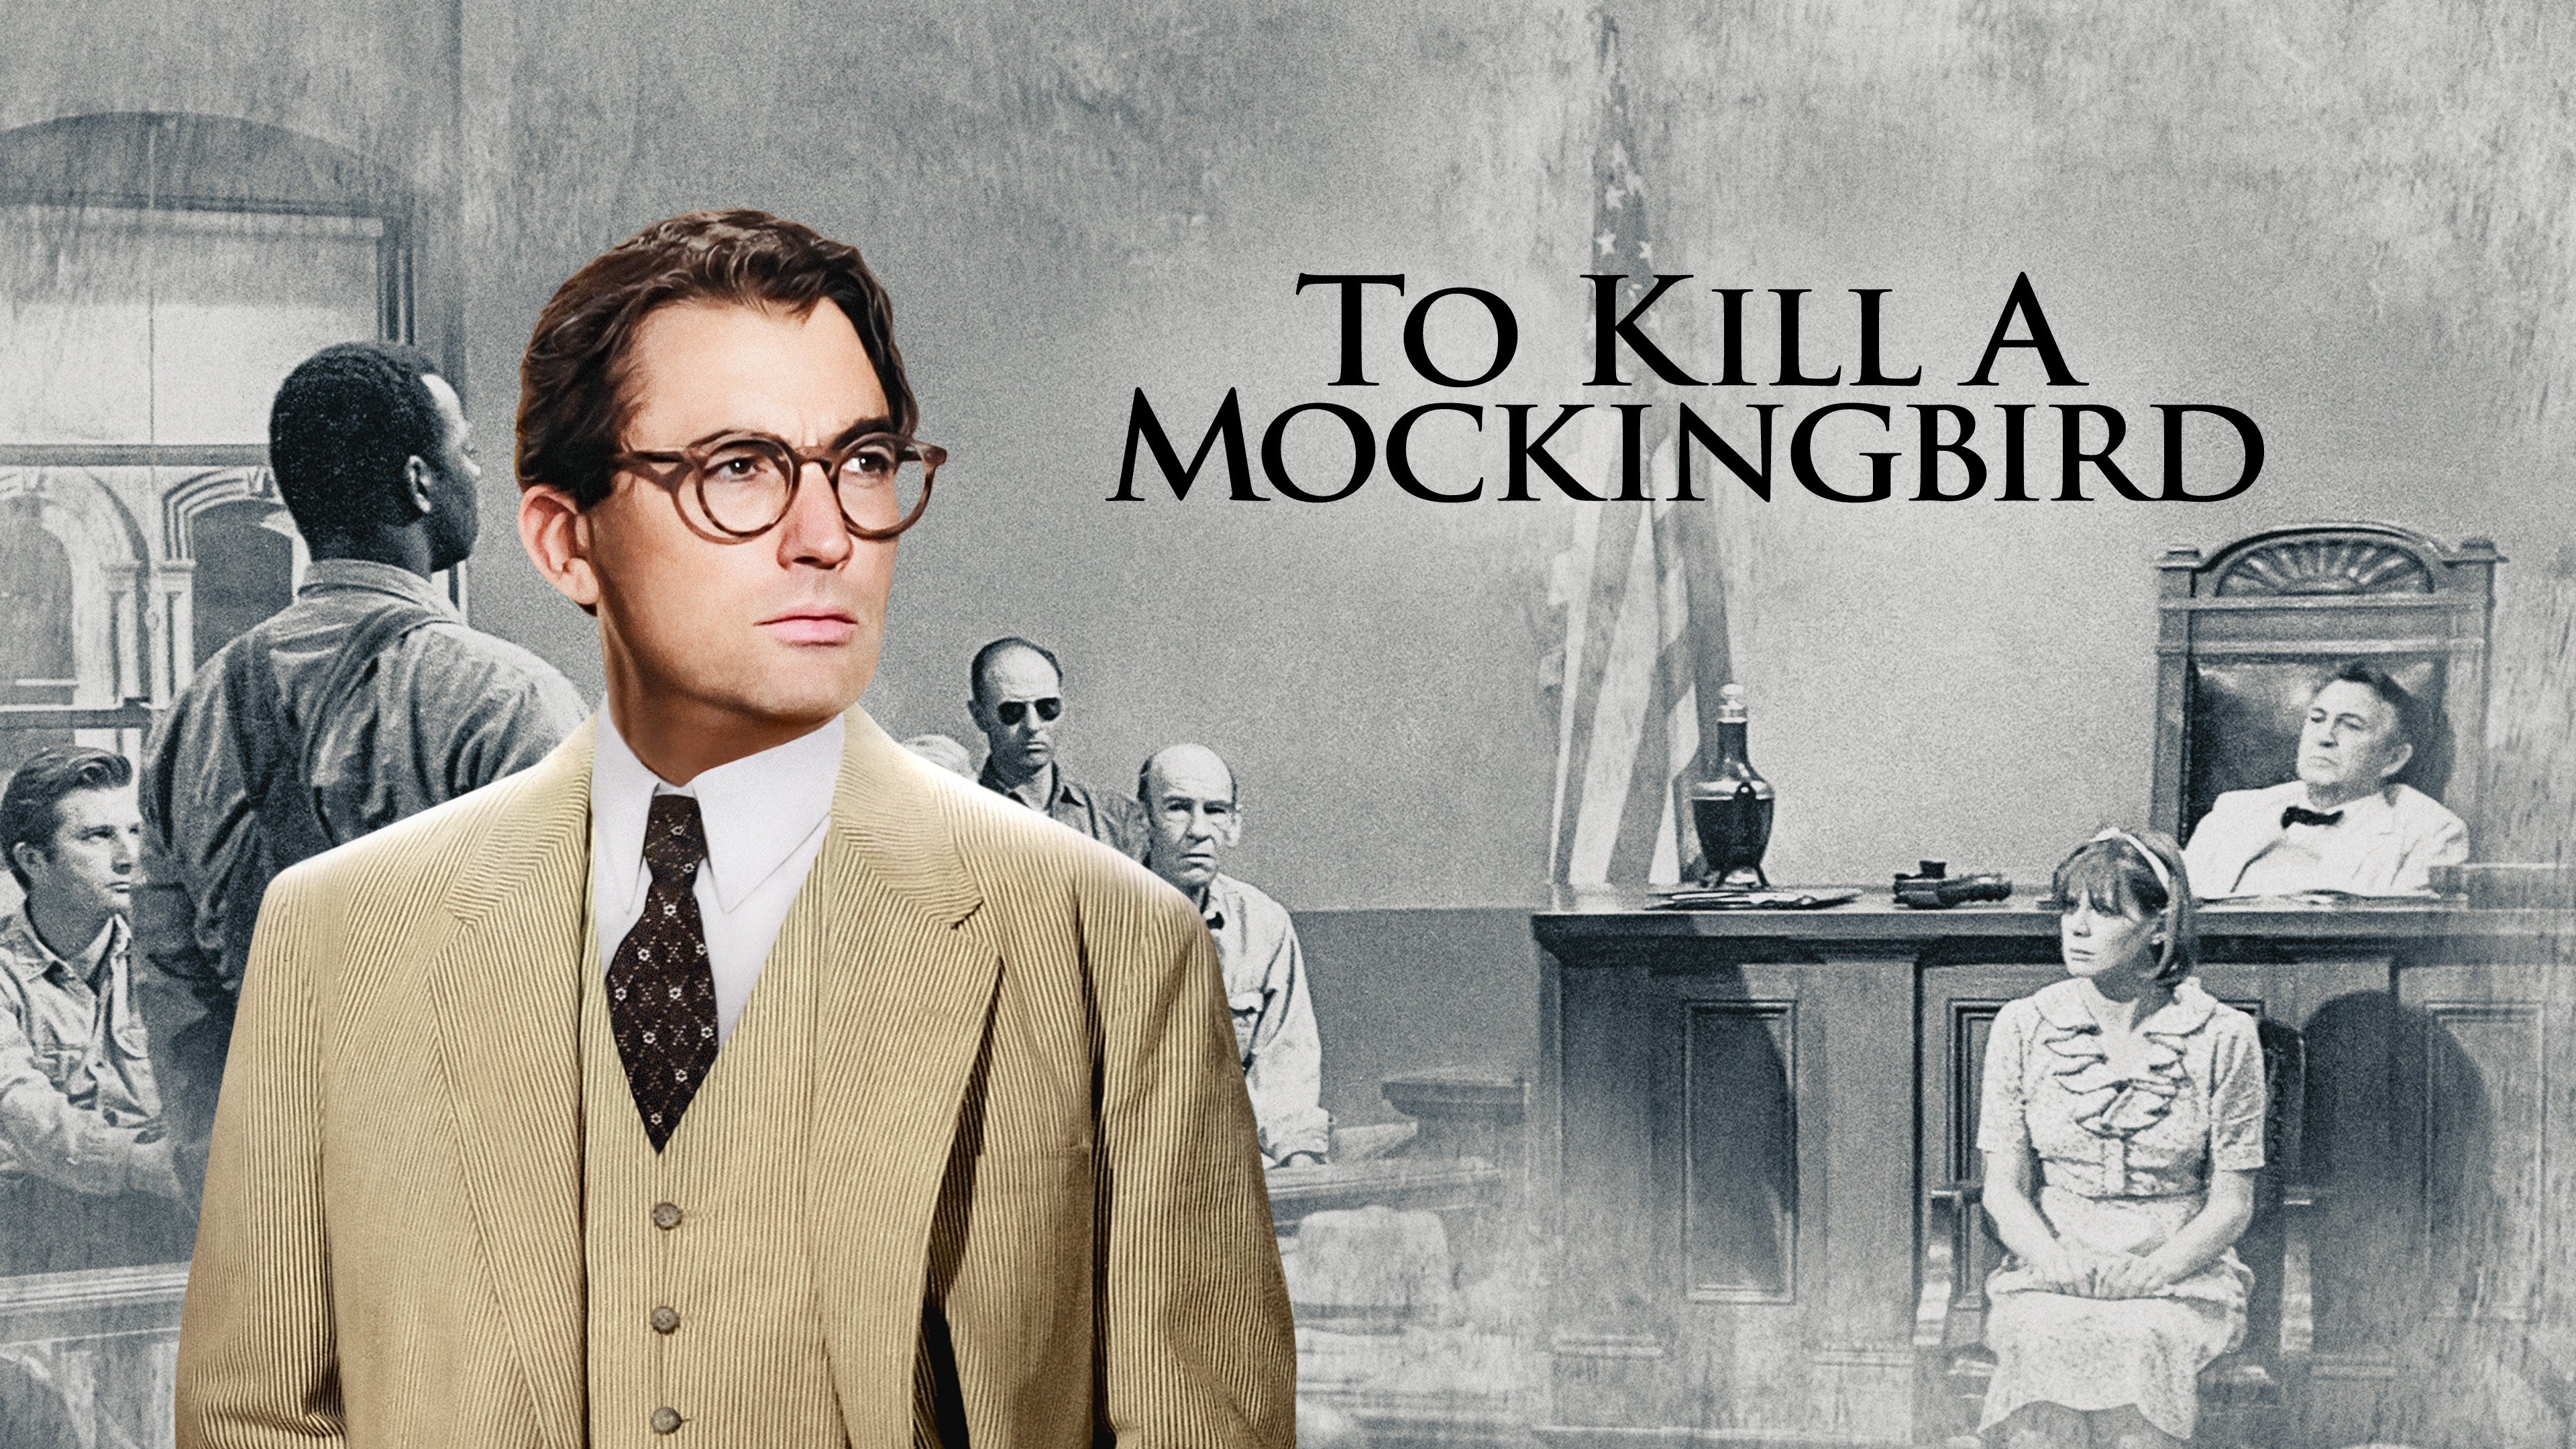 To Kill a Mockingbird movie cover.